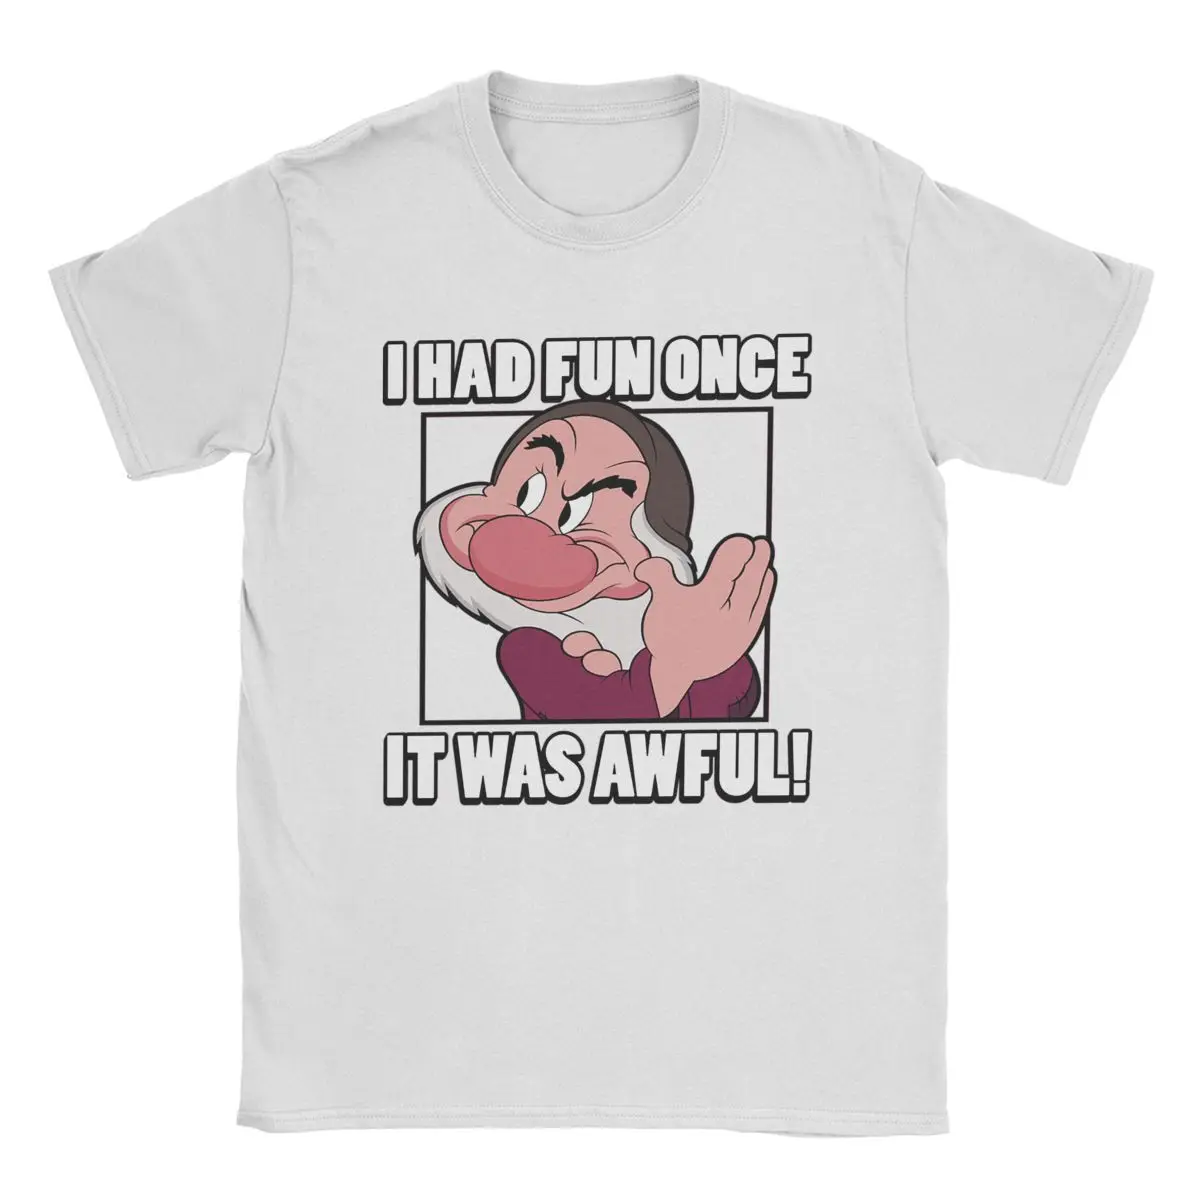 I Had Fun Once It Was Awful Disney Seven Dwarfs Grumpy T-Shirts Men 100% Cotton Tee Shirt Short Sleeve T Shirt Graphic Clothing